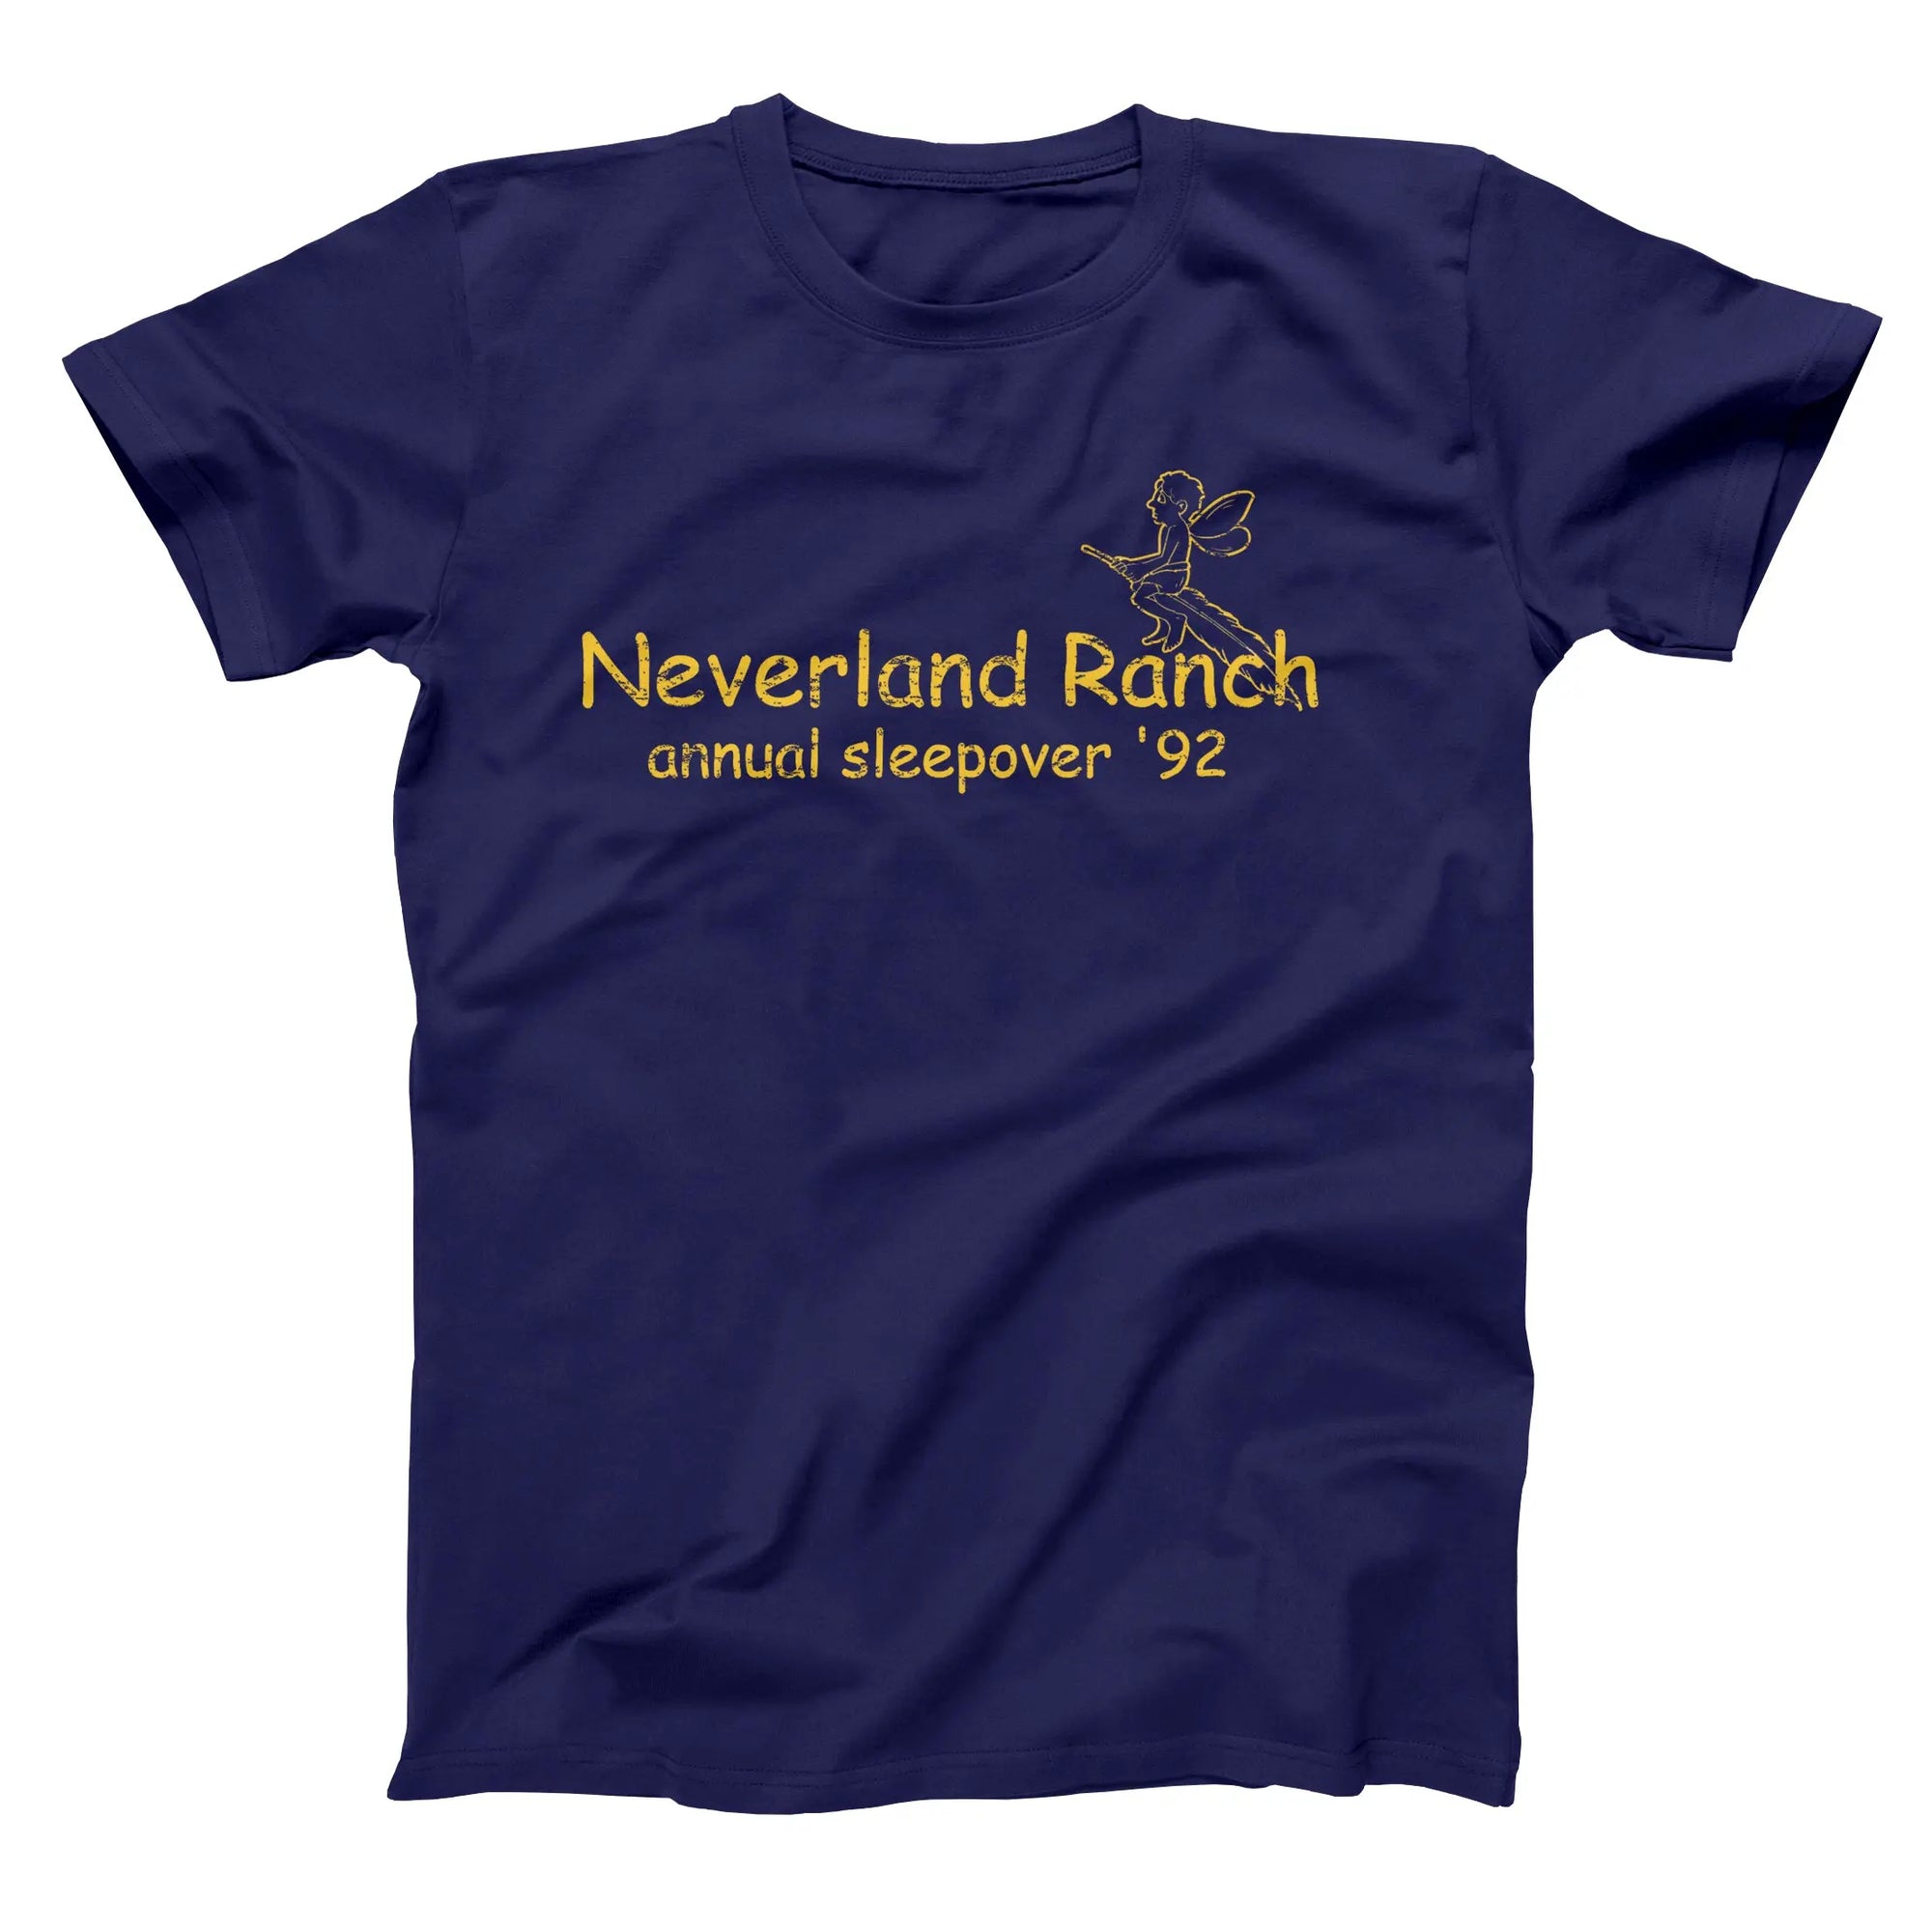 Neverland Ranch Sleepover 92 Tshirt - Donkey Tees